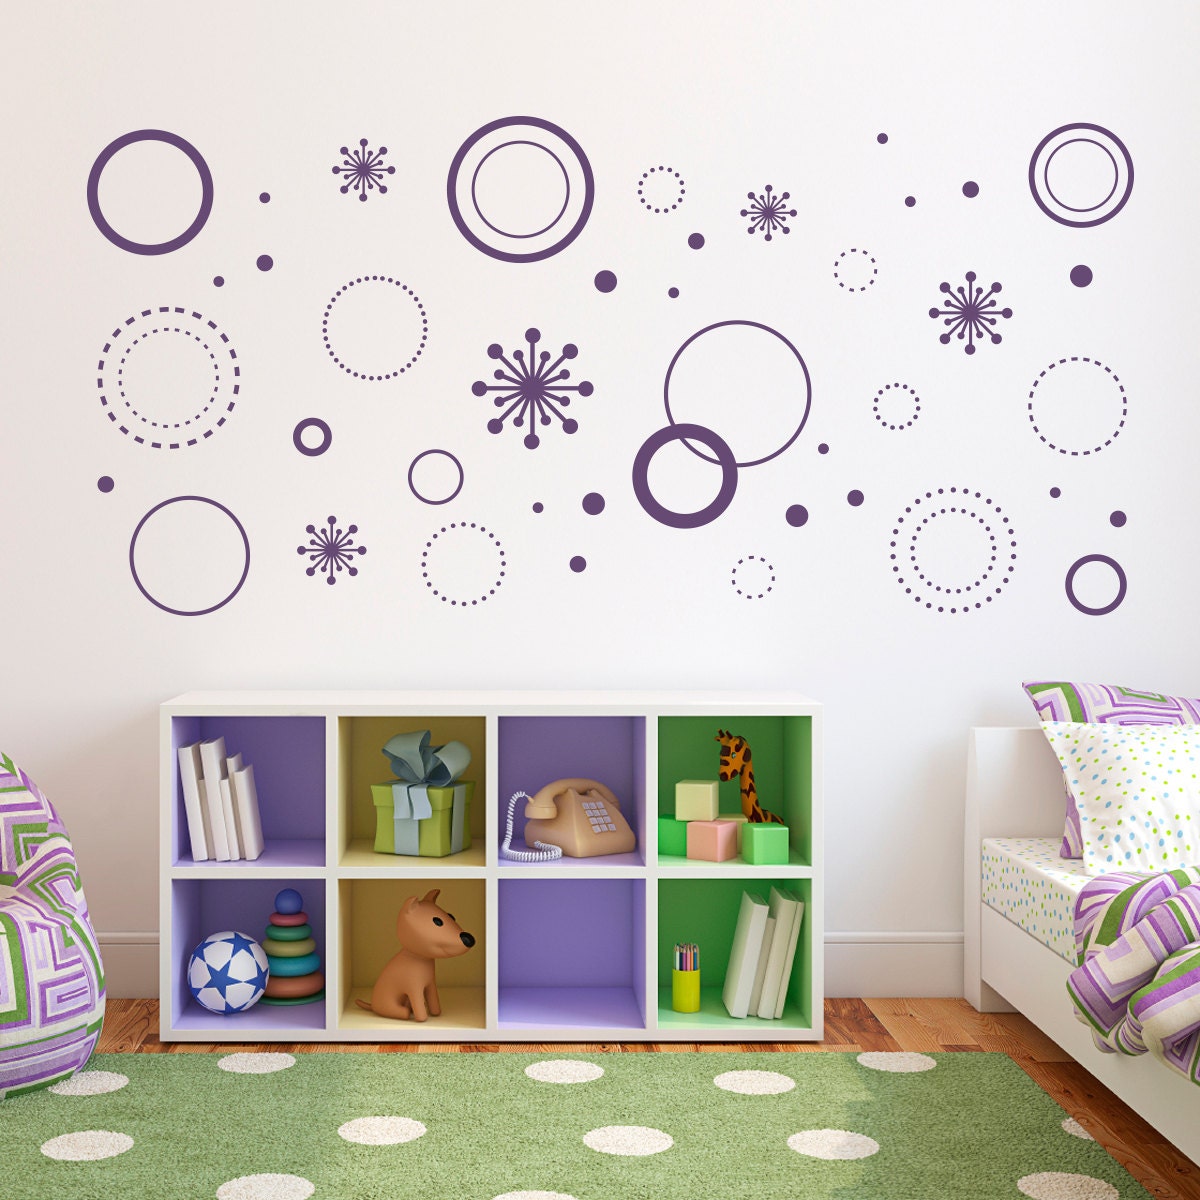 Crazy Circles Wall Decal - Circle Wall Art - Starburst Decals - Girl Bedroom Decal Set